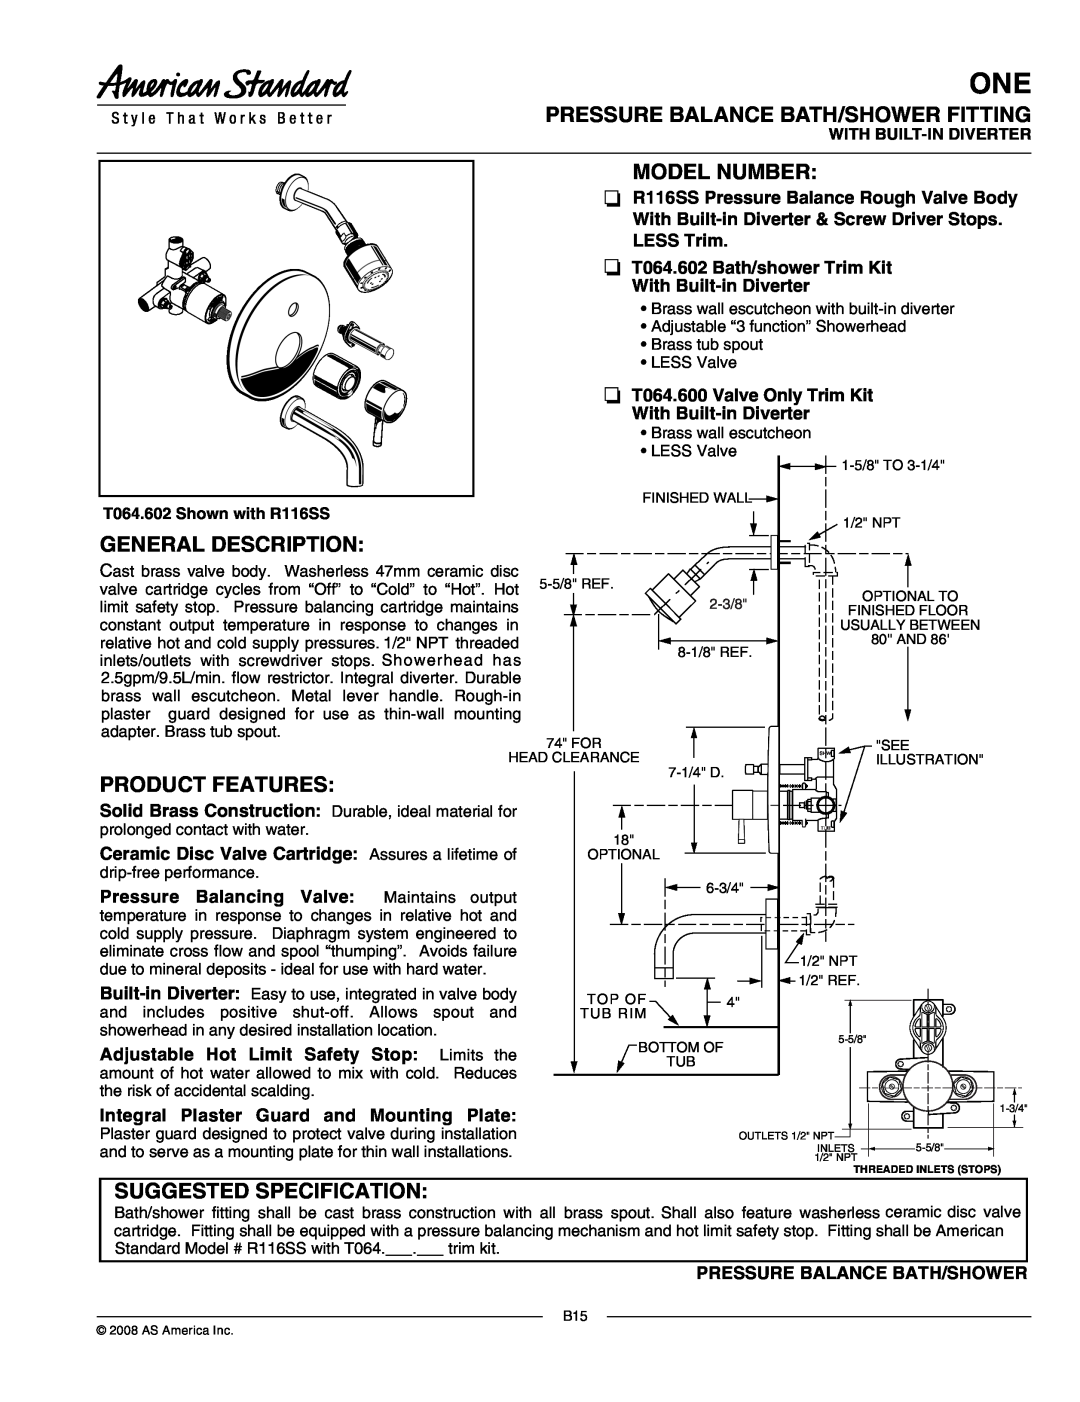 American Standard T064.602, T064.600, R116SS manual Pressure Balance Bath/Shower Fitting, Model Number, General Description 